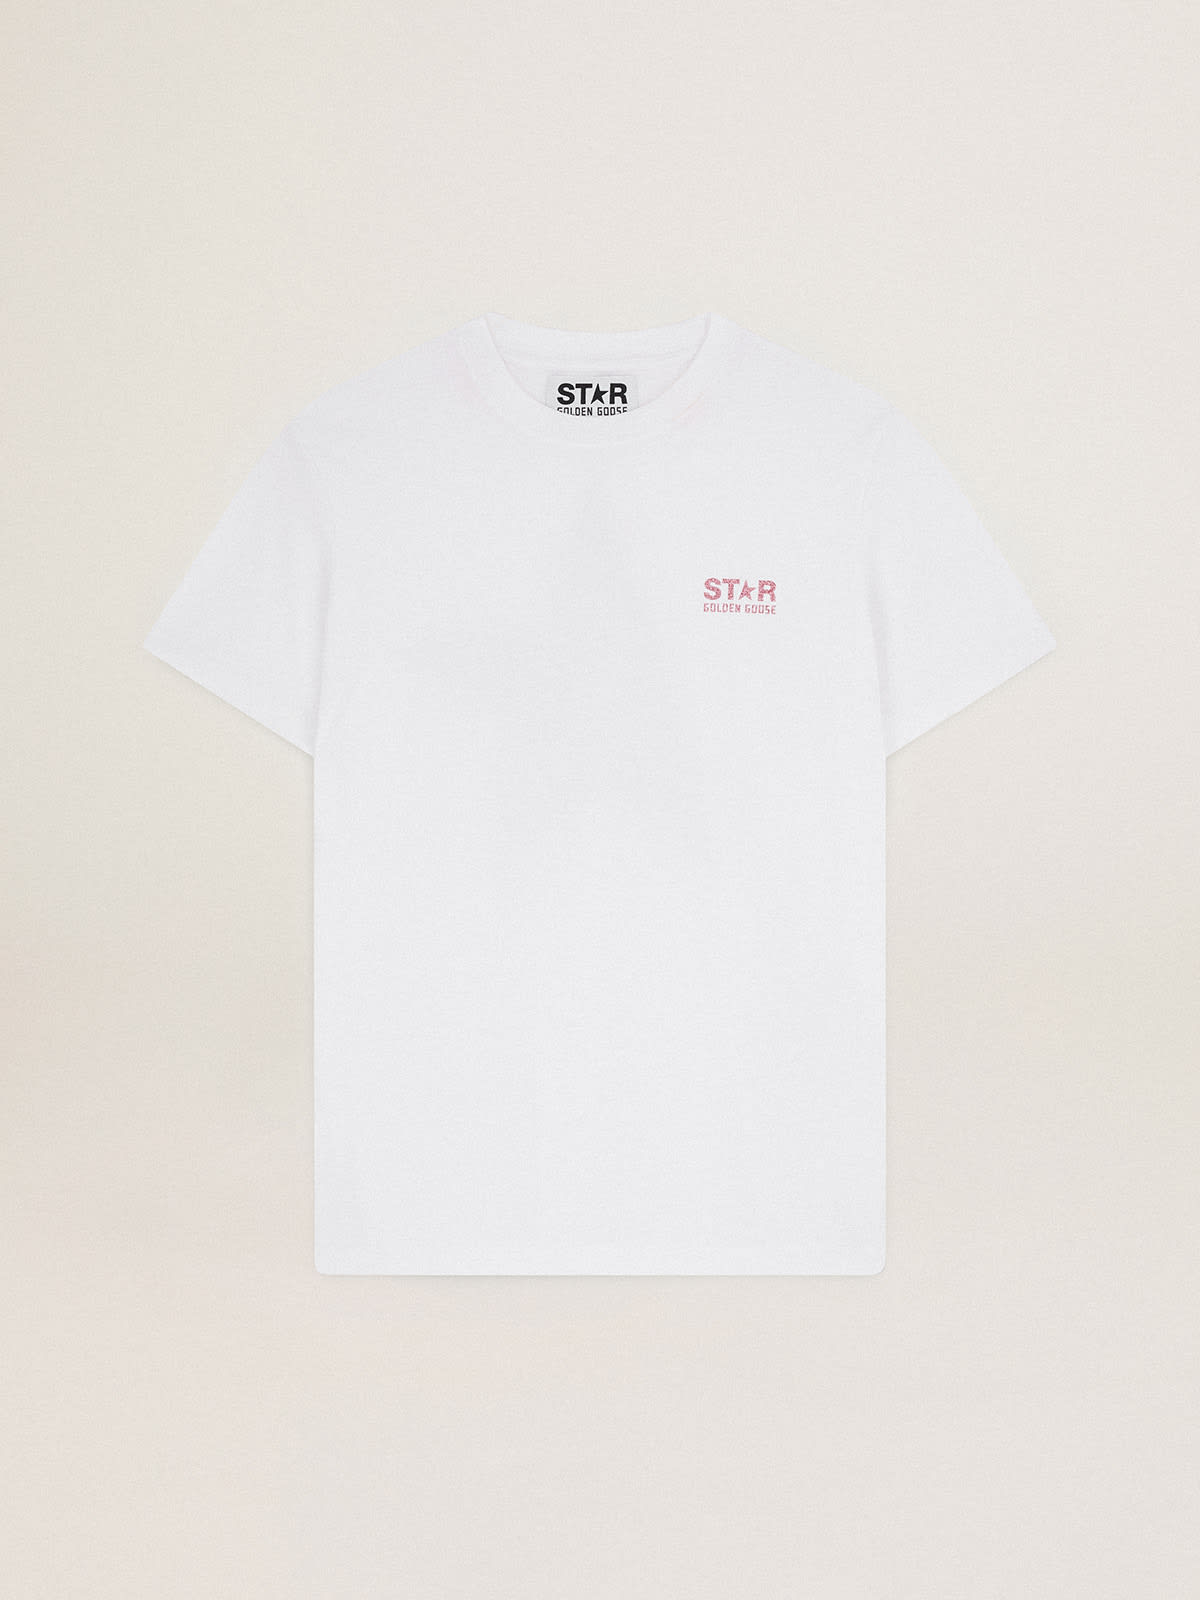 Golden Goose - Camiseta feminina branca com logo e estrela de glitter rosa in 